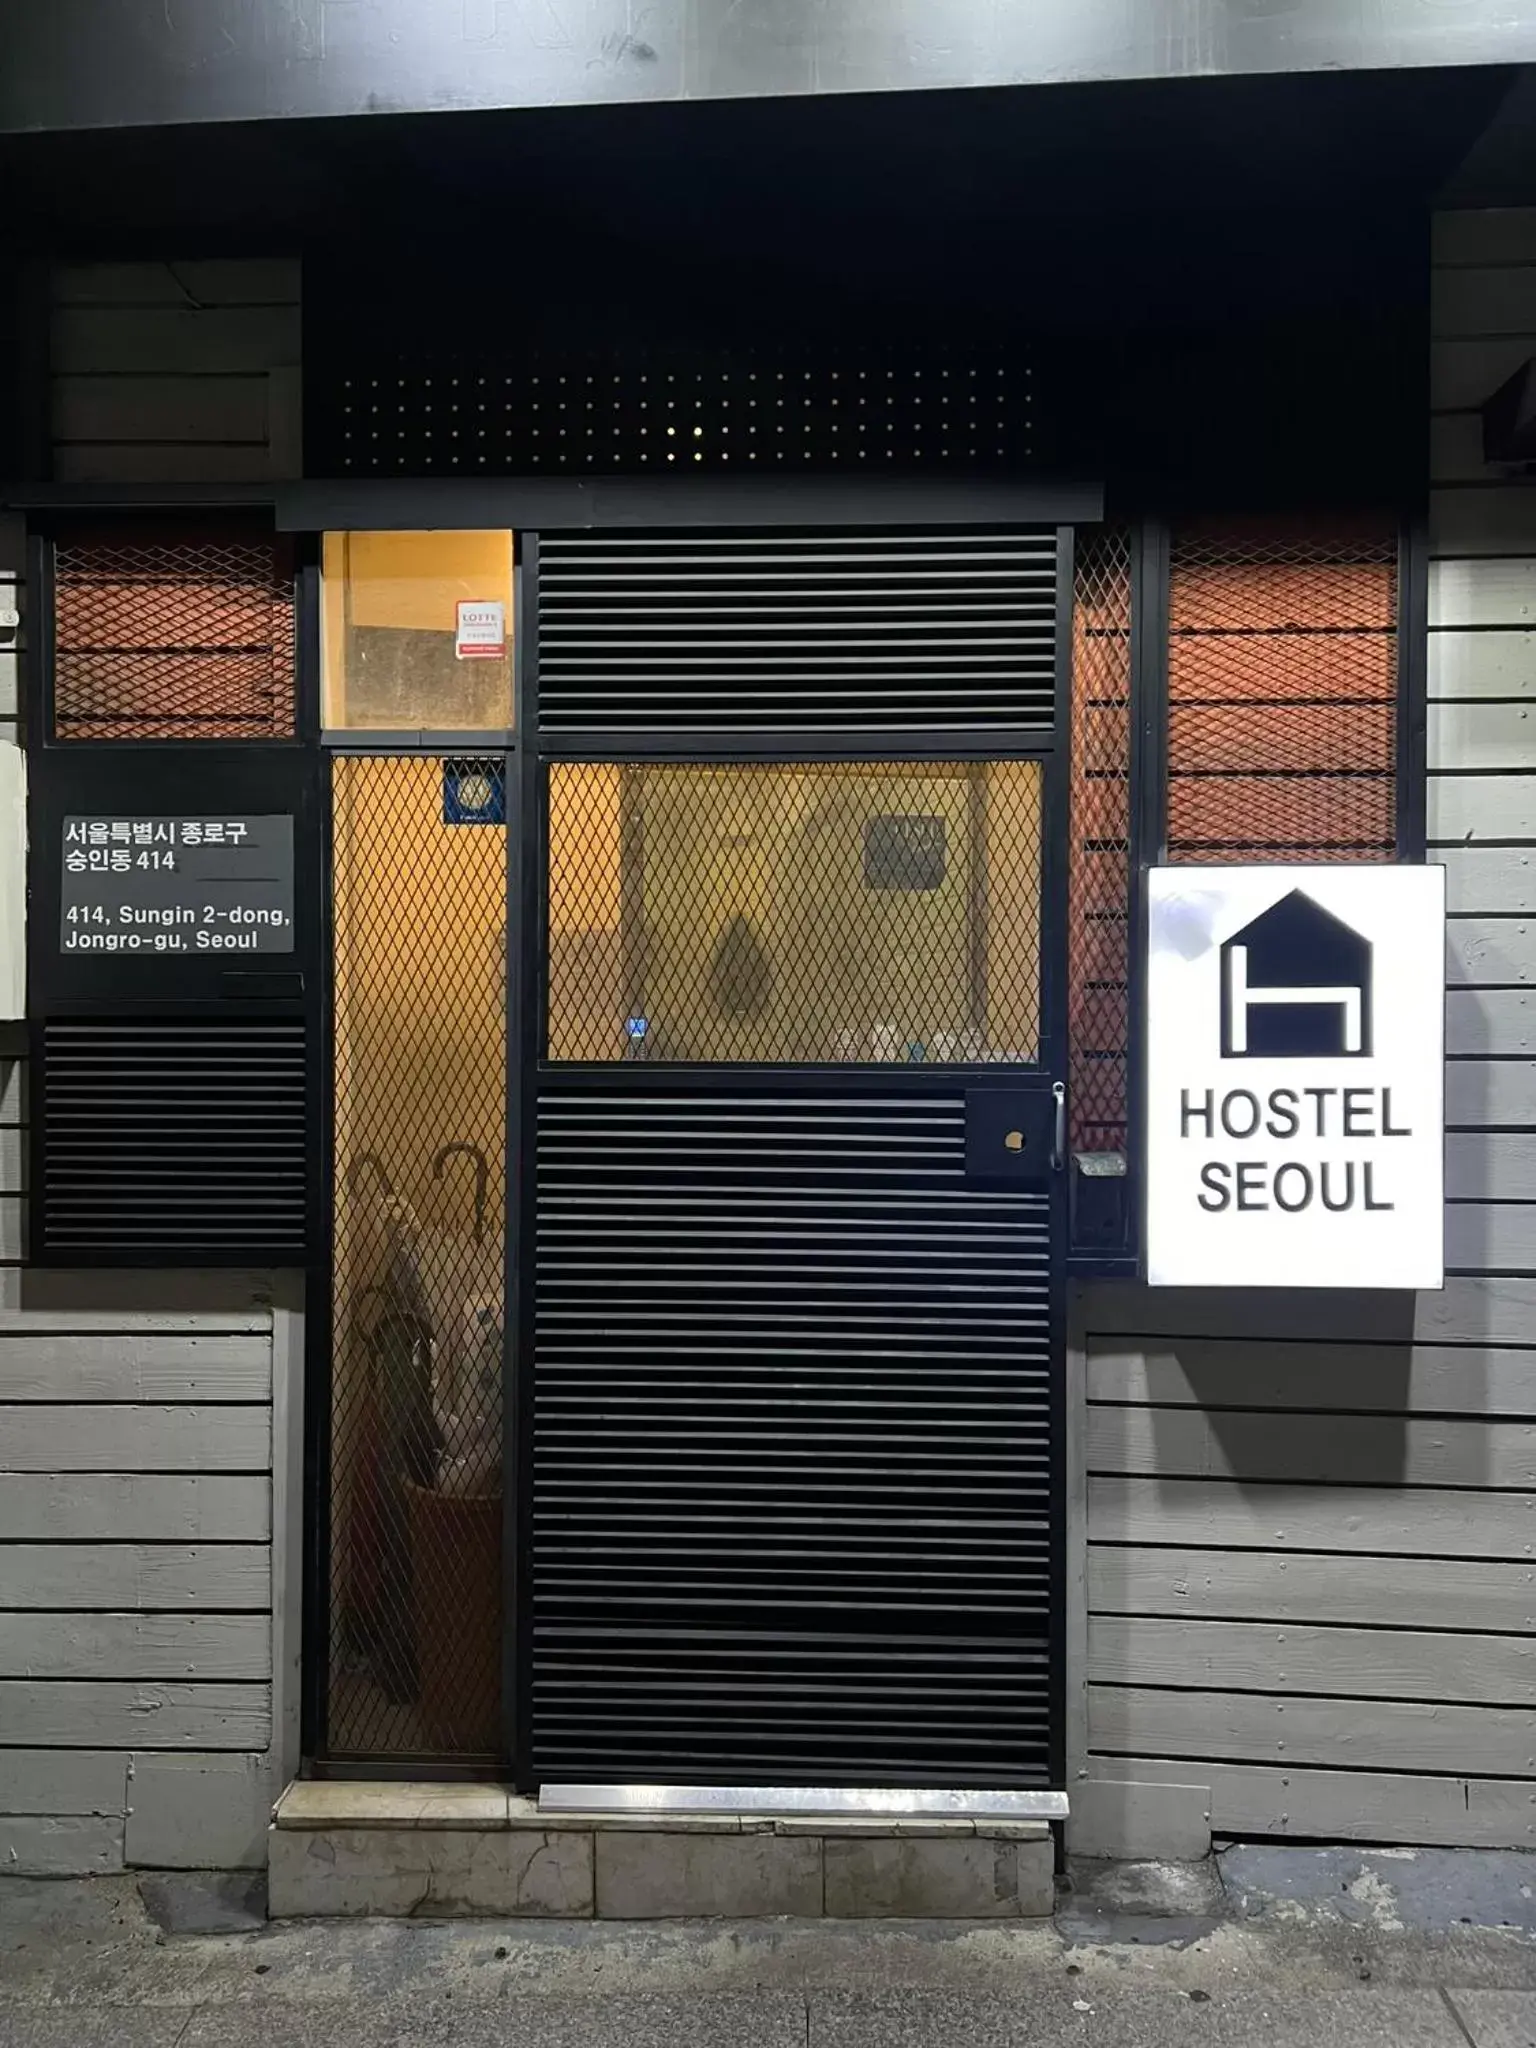 Property building in Hostel Seoul